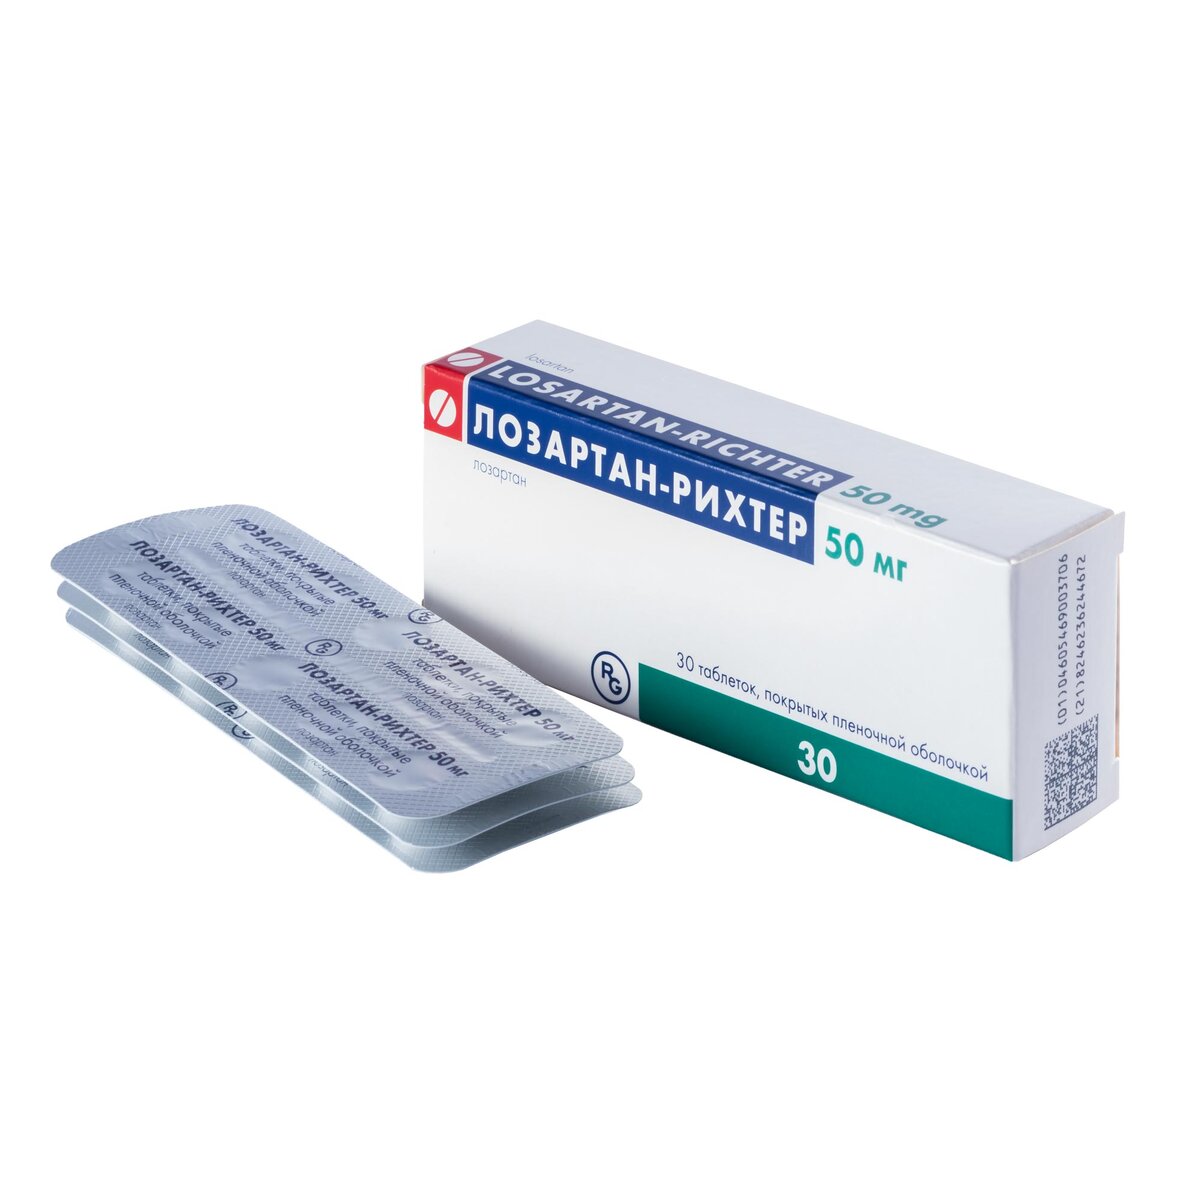 Лозартан-Рихтер таблетки 50 мг 30 шт.